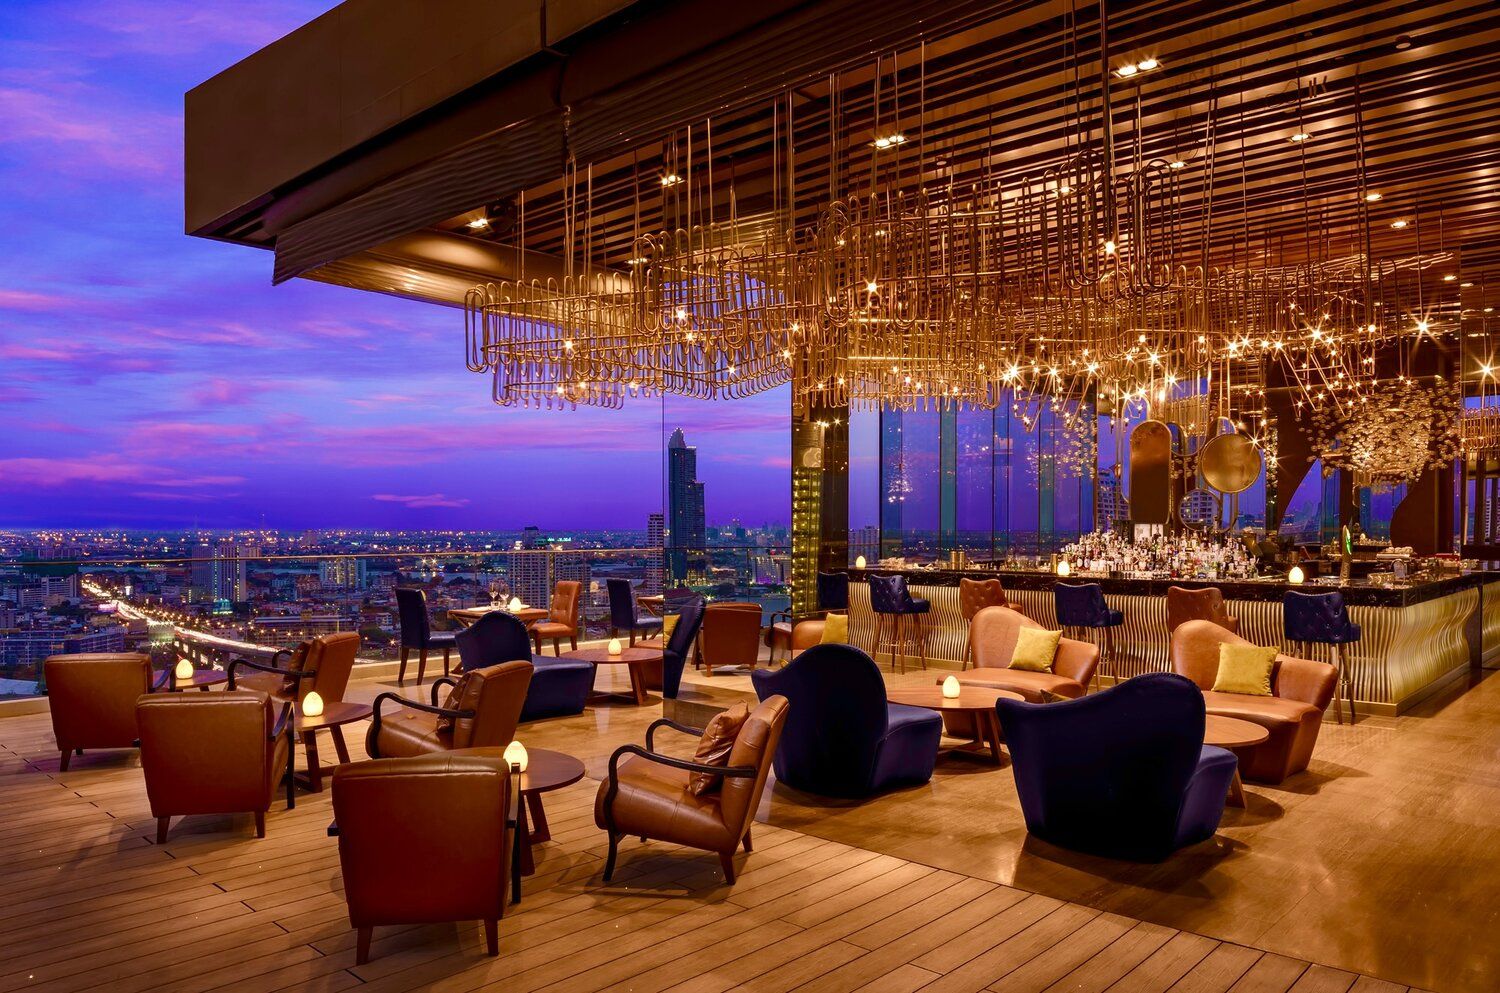 SEEN Restaurant & Bar Bangkok offers a captivating, multi-sensory experience.